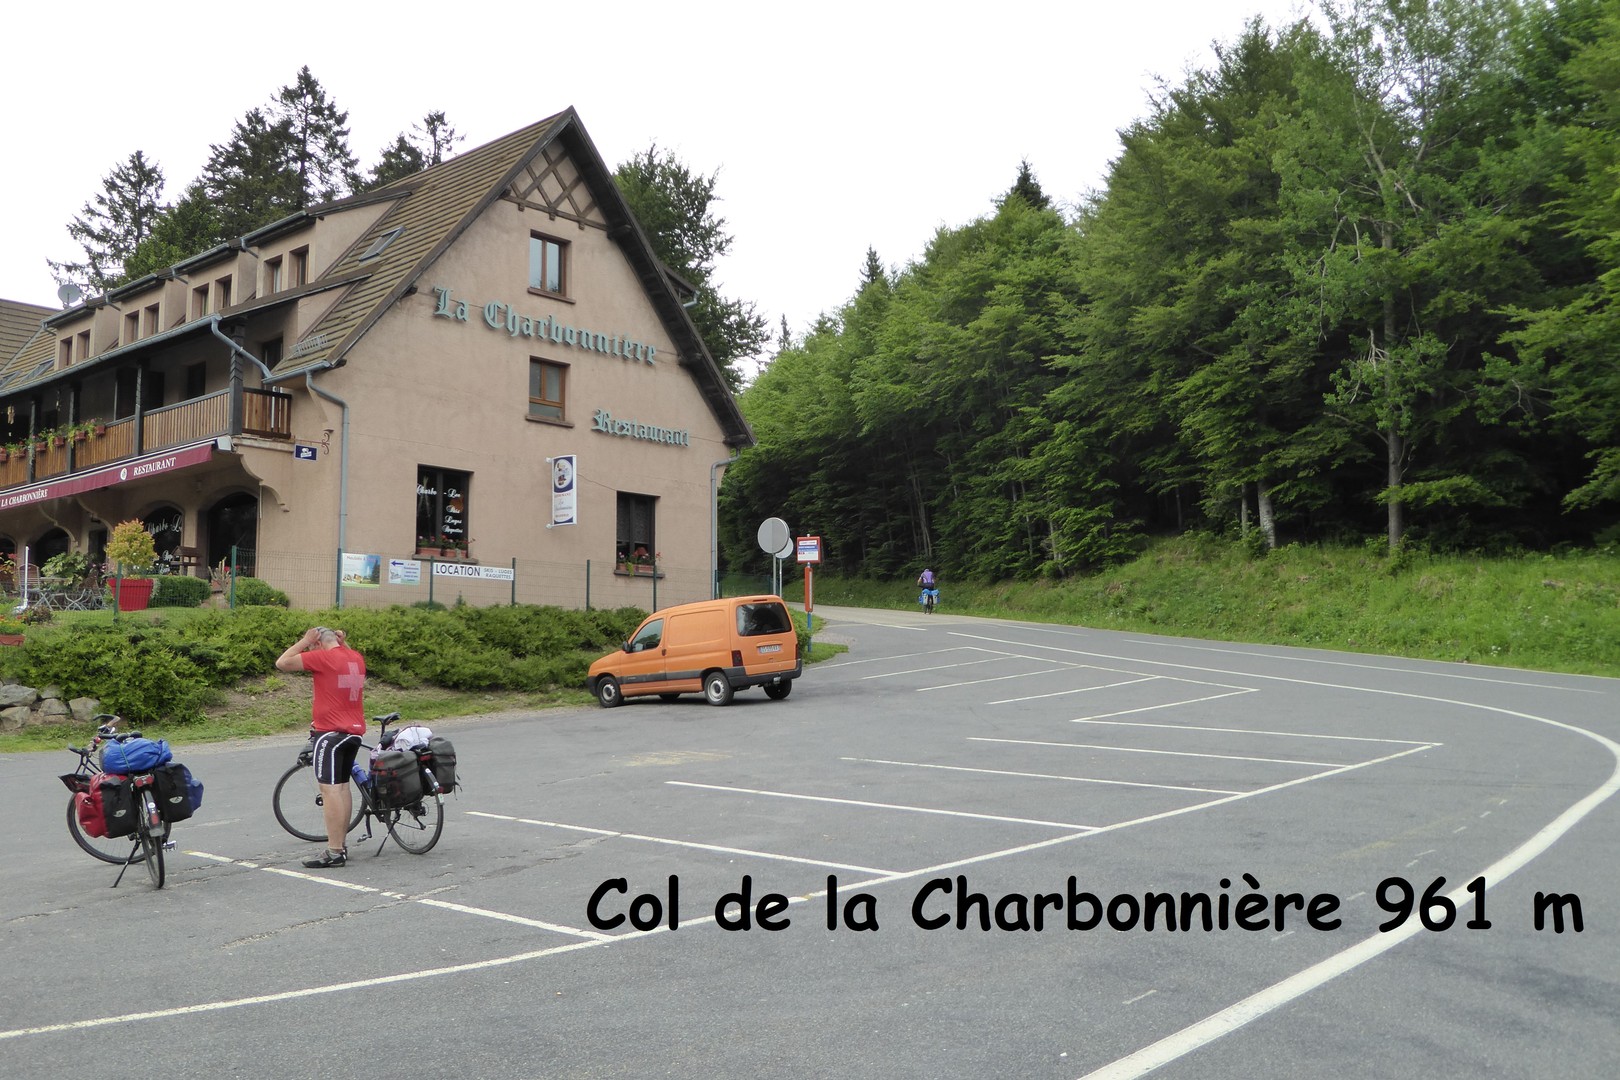 Col de la Charbonniere.